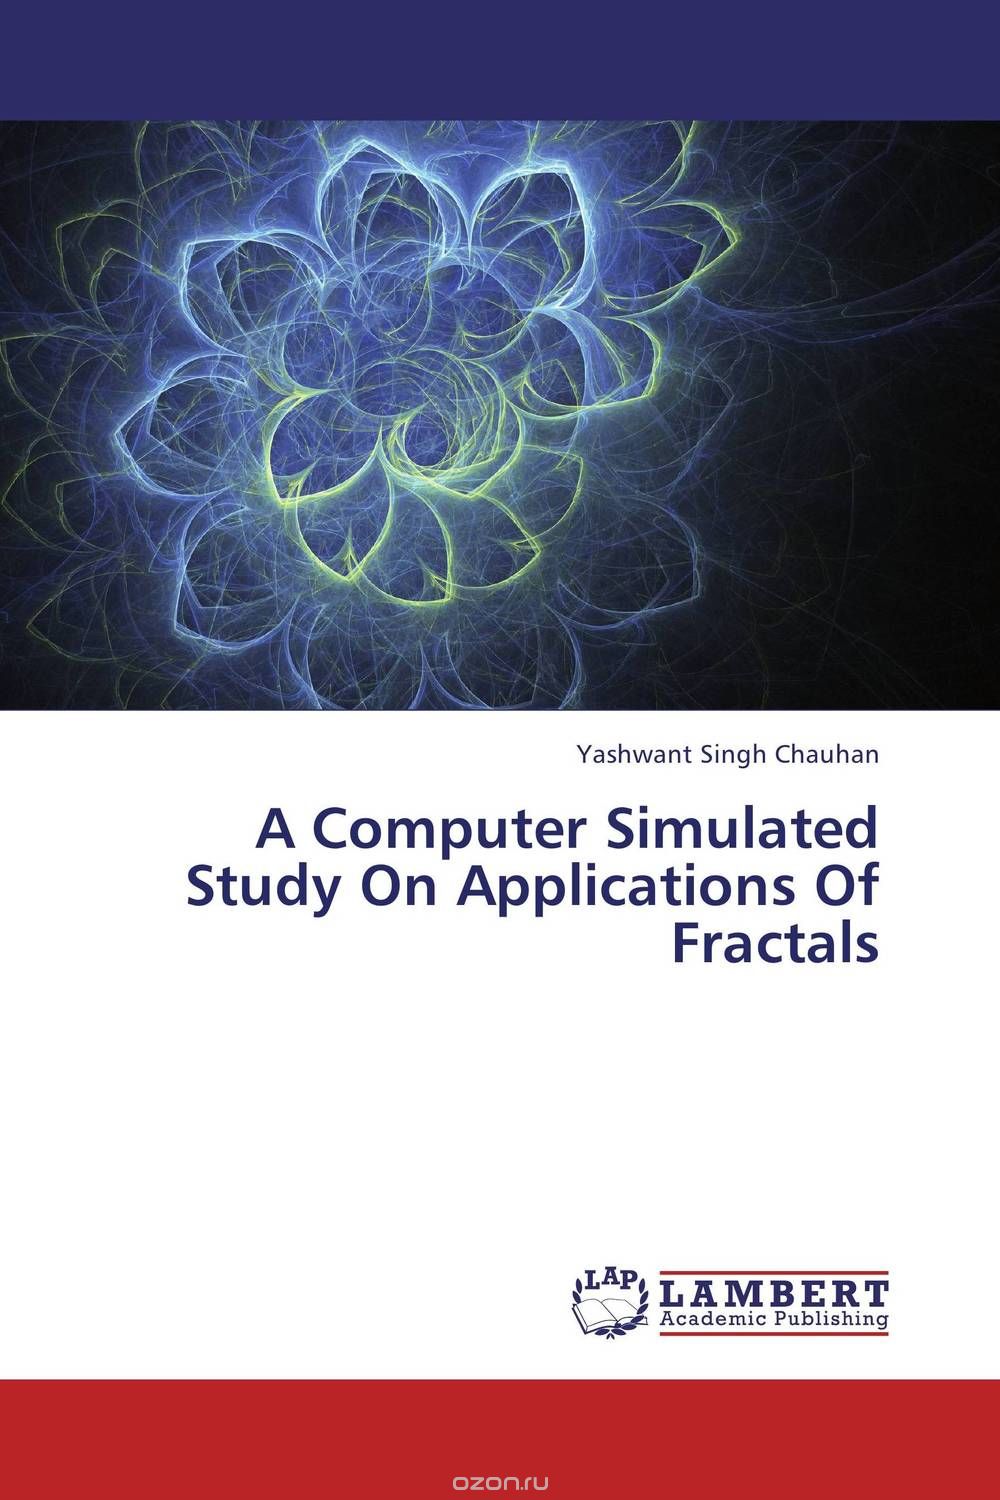 Скачать книгу "A Computer Simulated Study On Applications Of Fractals"